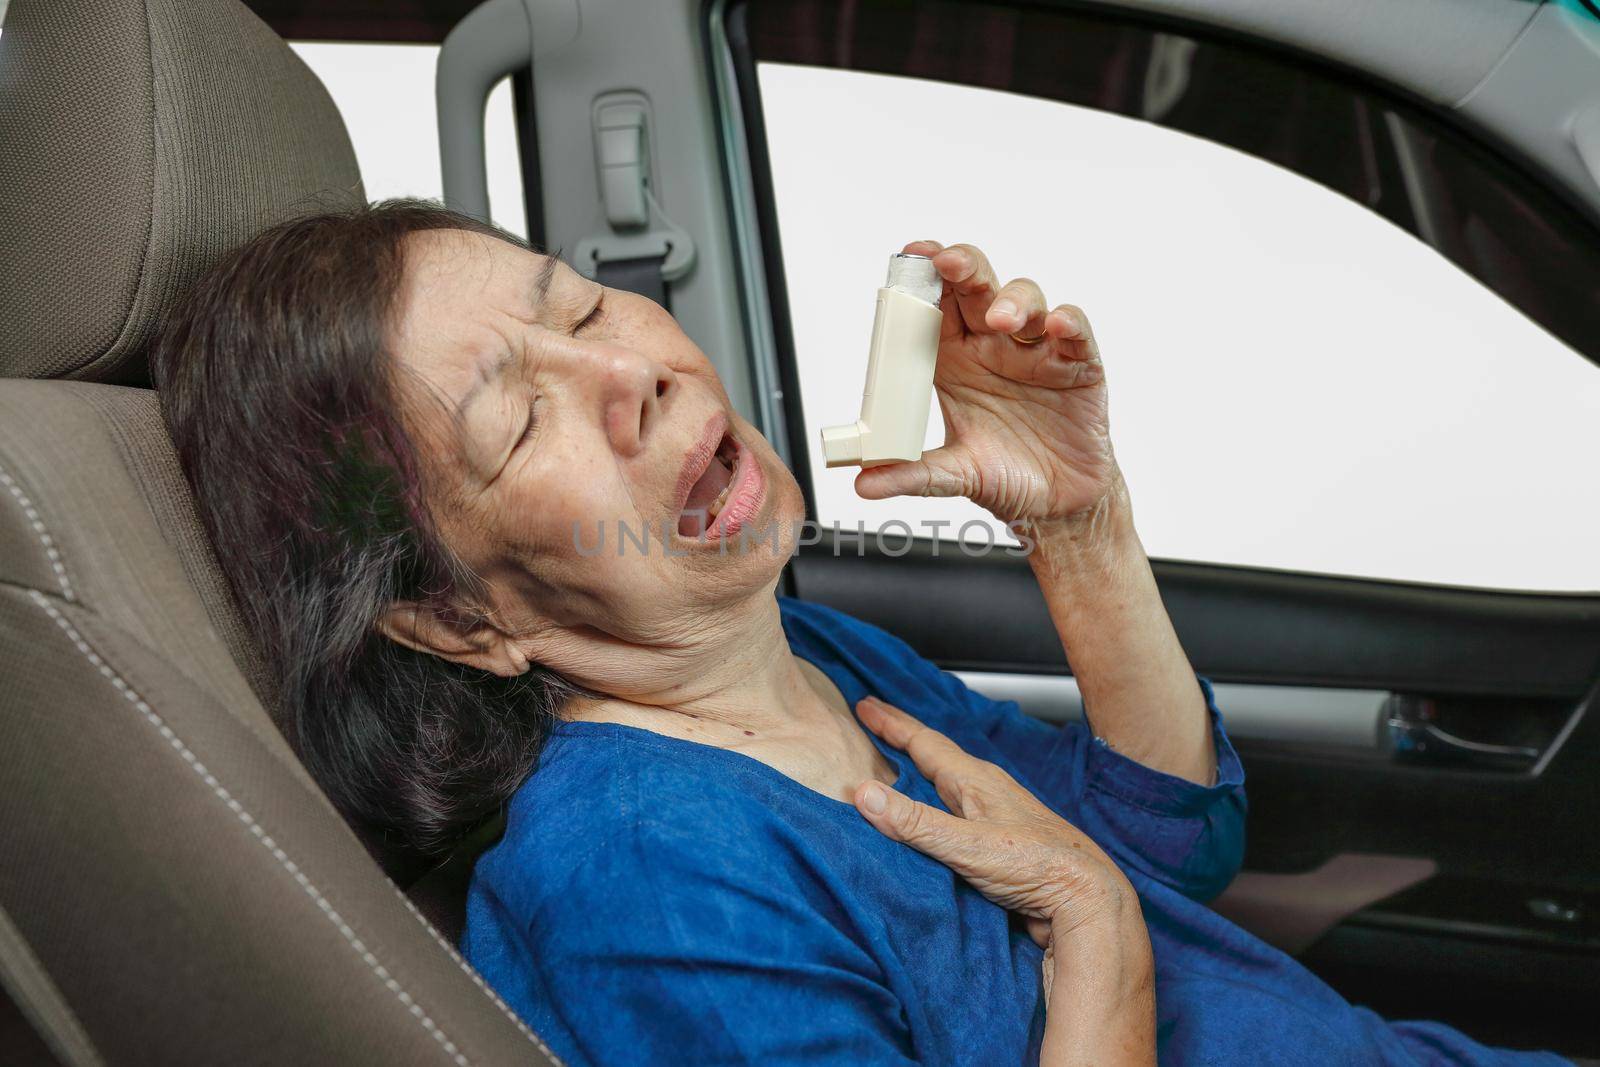 Elderly woman choking and holding an asthma spray inside car on the way